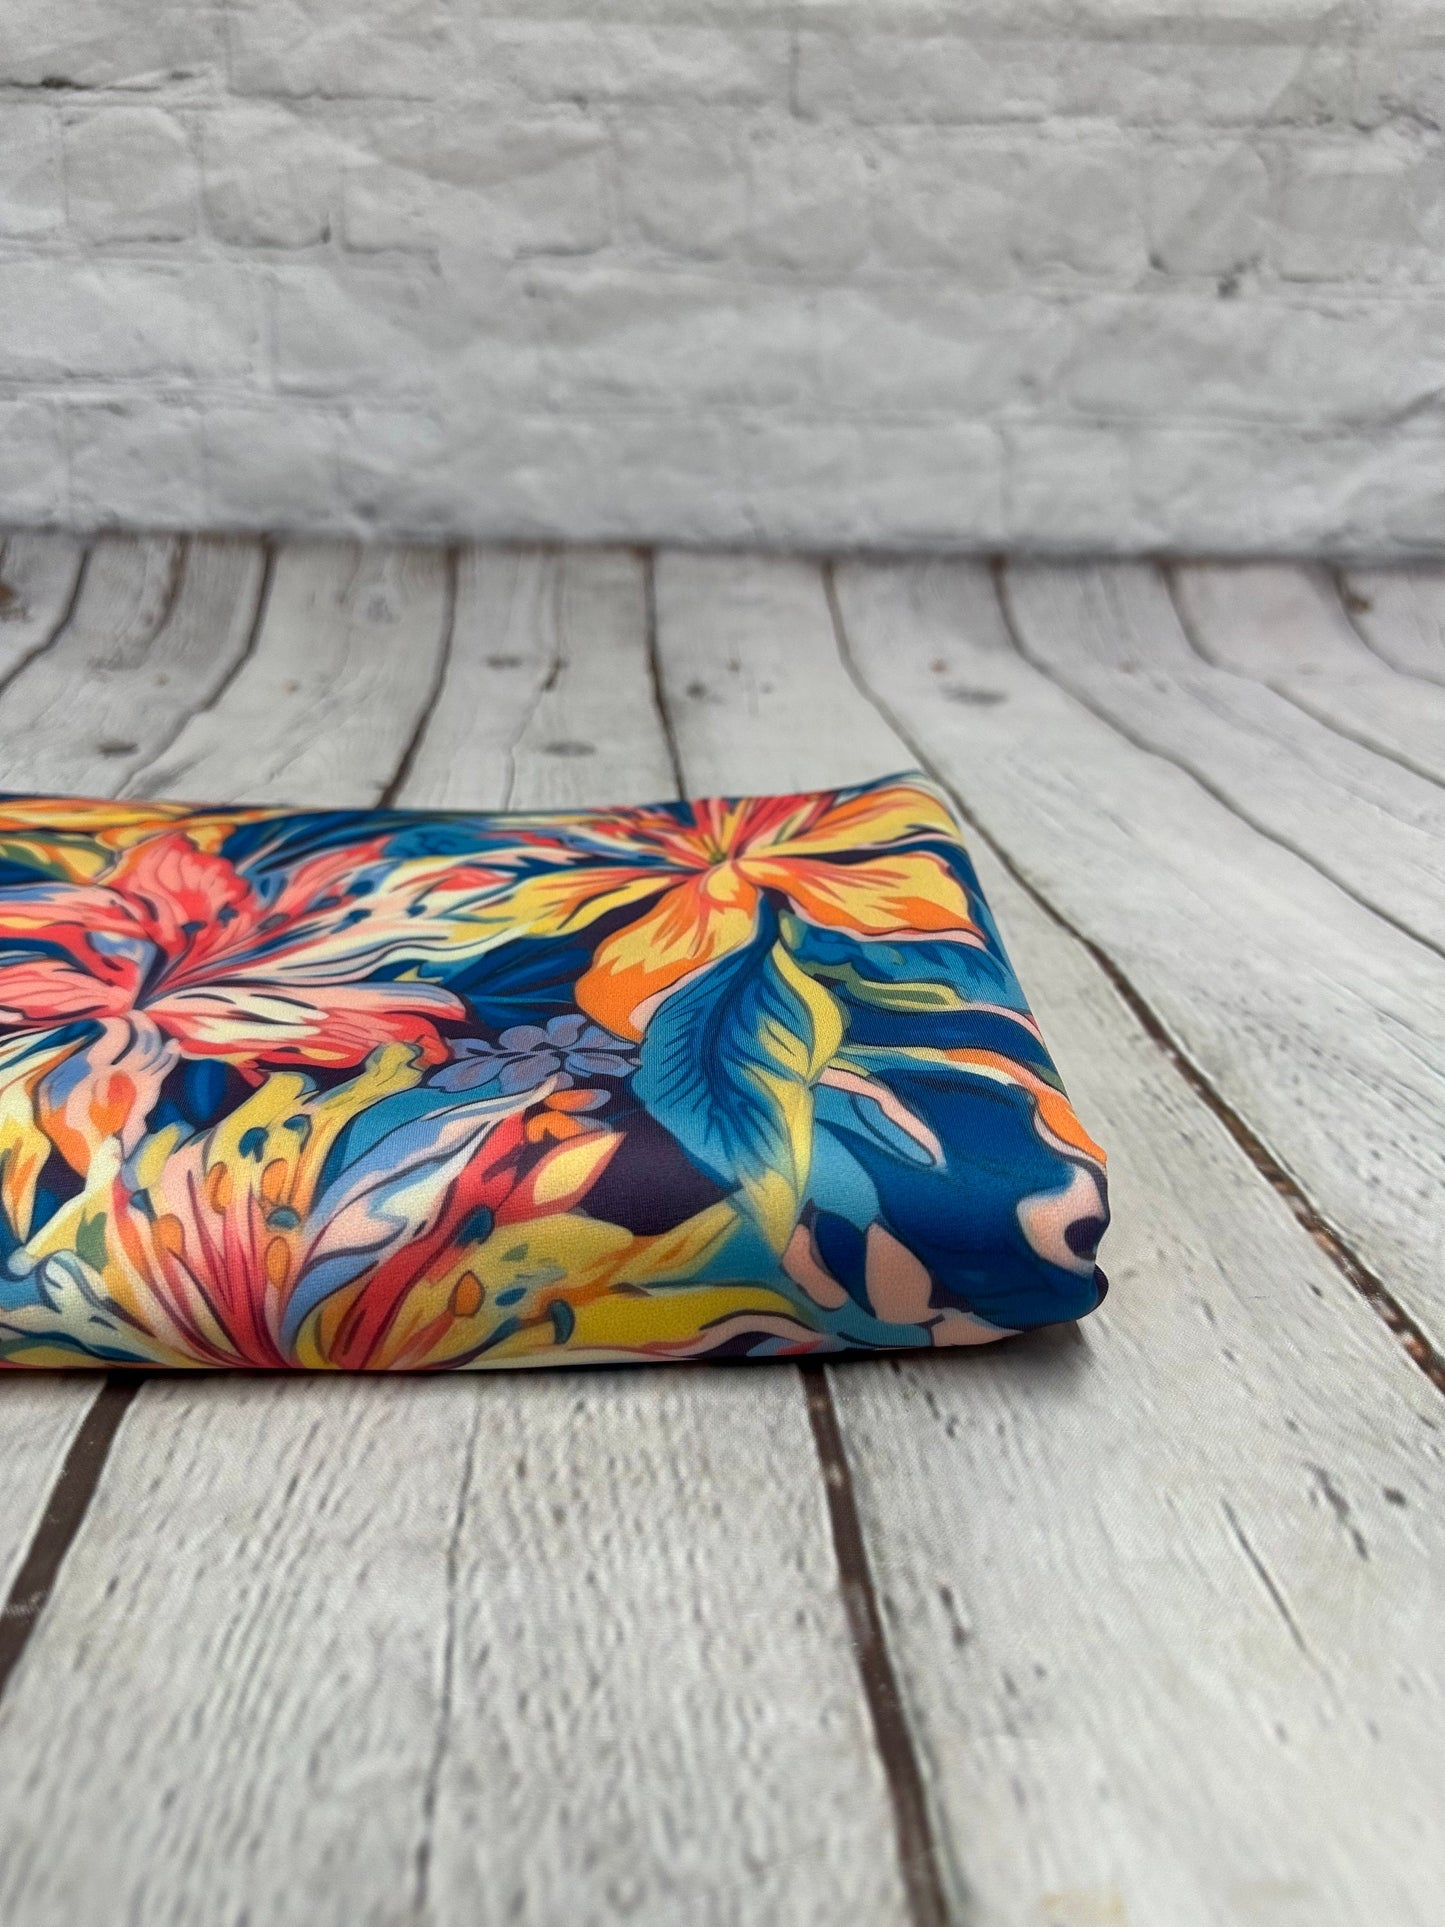 4 Way Stretch Print Spandex Fabric By The Yard Tricot Swim Wear Bikini  Bright Tropical Floral Flower